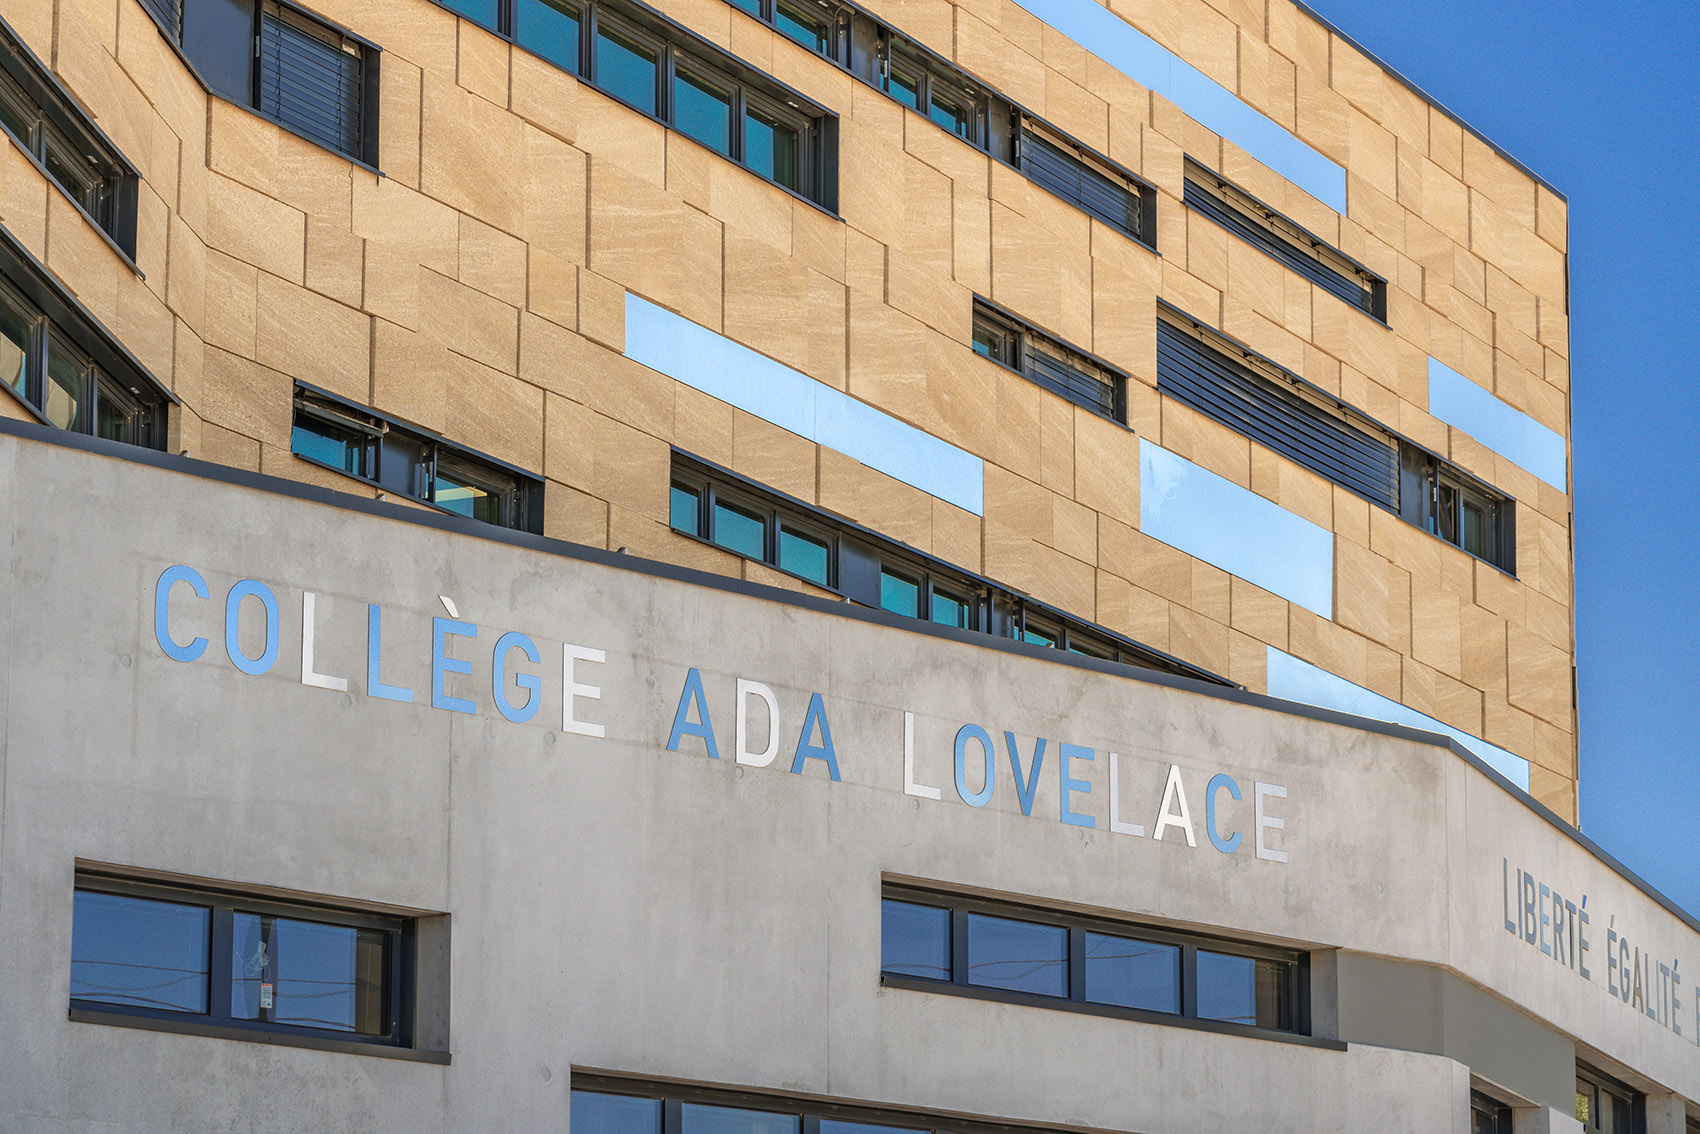 Ada Lovelace中学/有机、环保的设计和运作方式-7